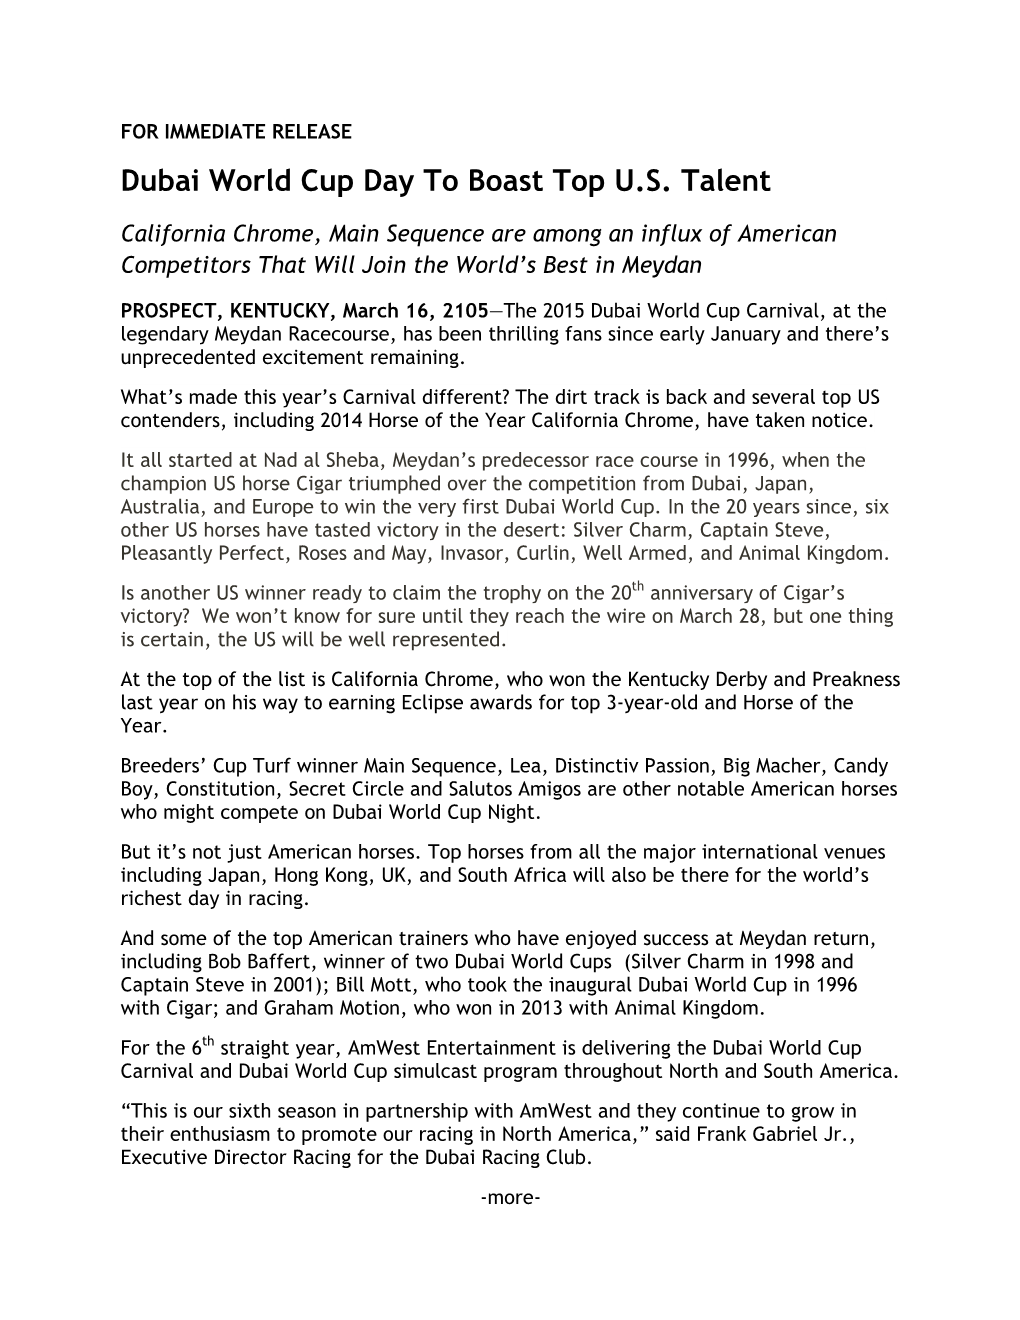 Dubai World Cup Day to Boast Top U.S. Talent